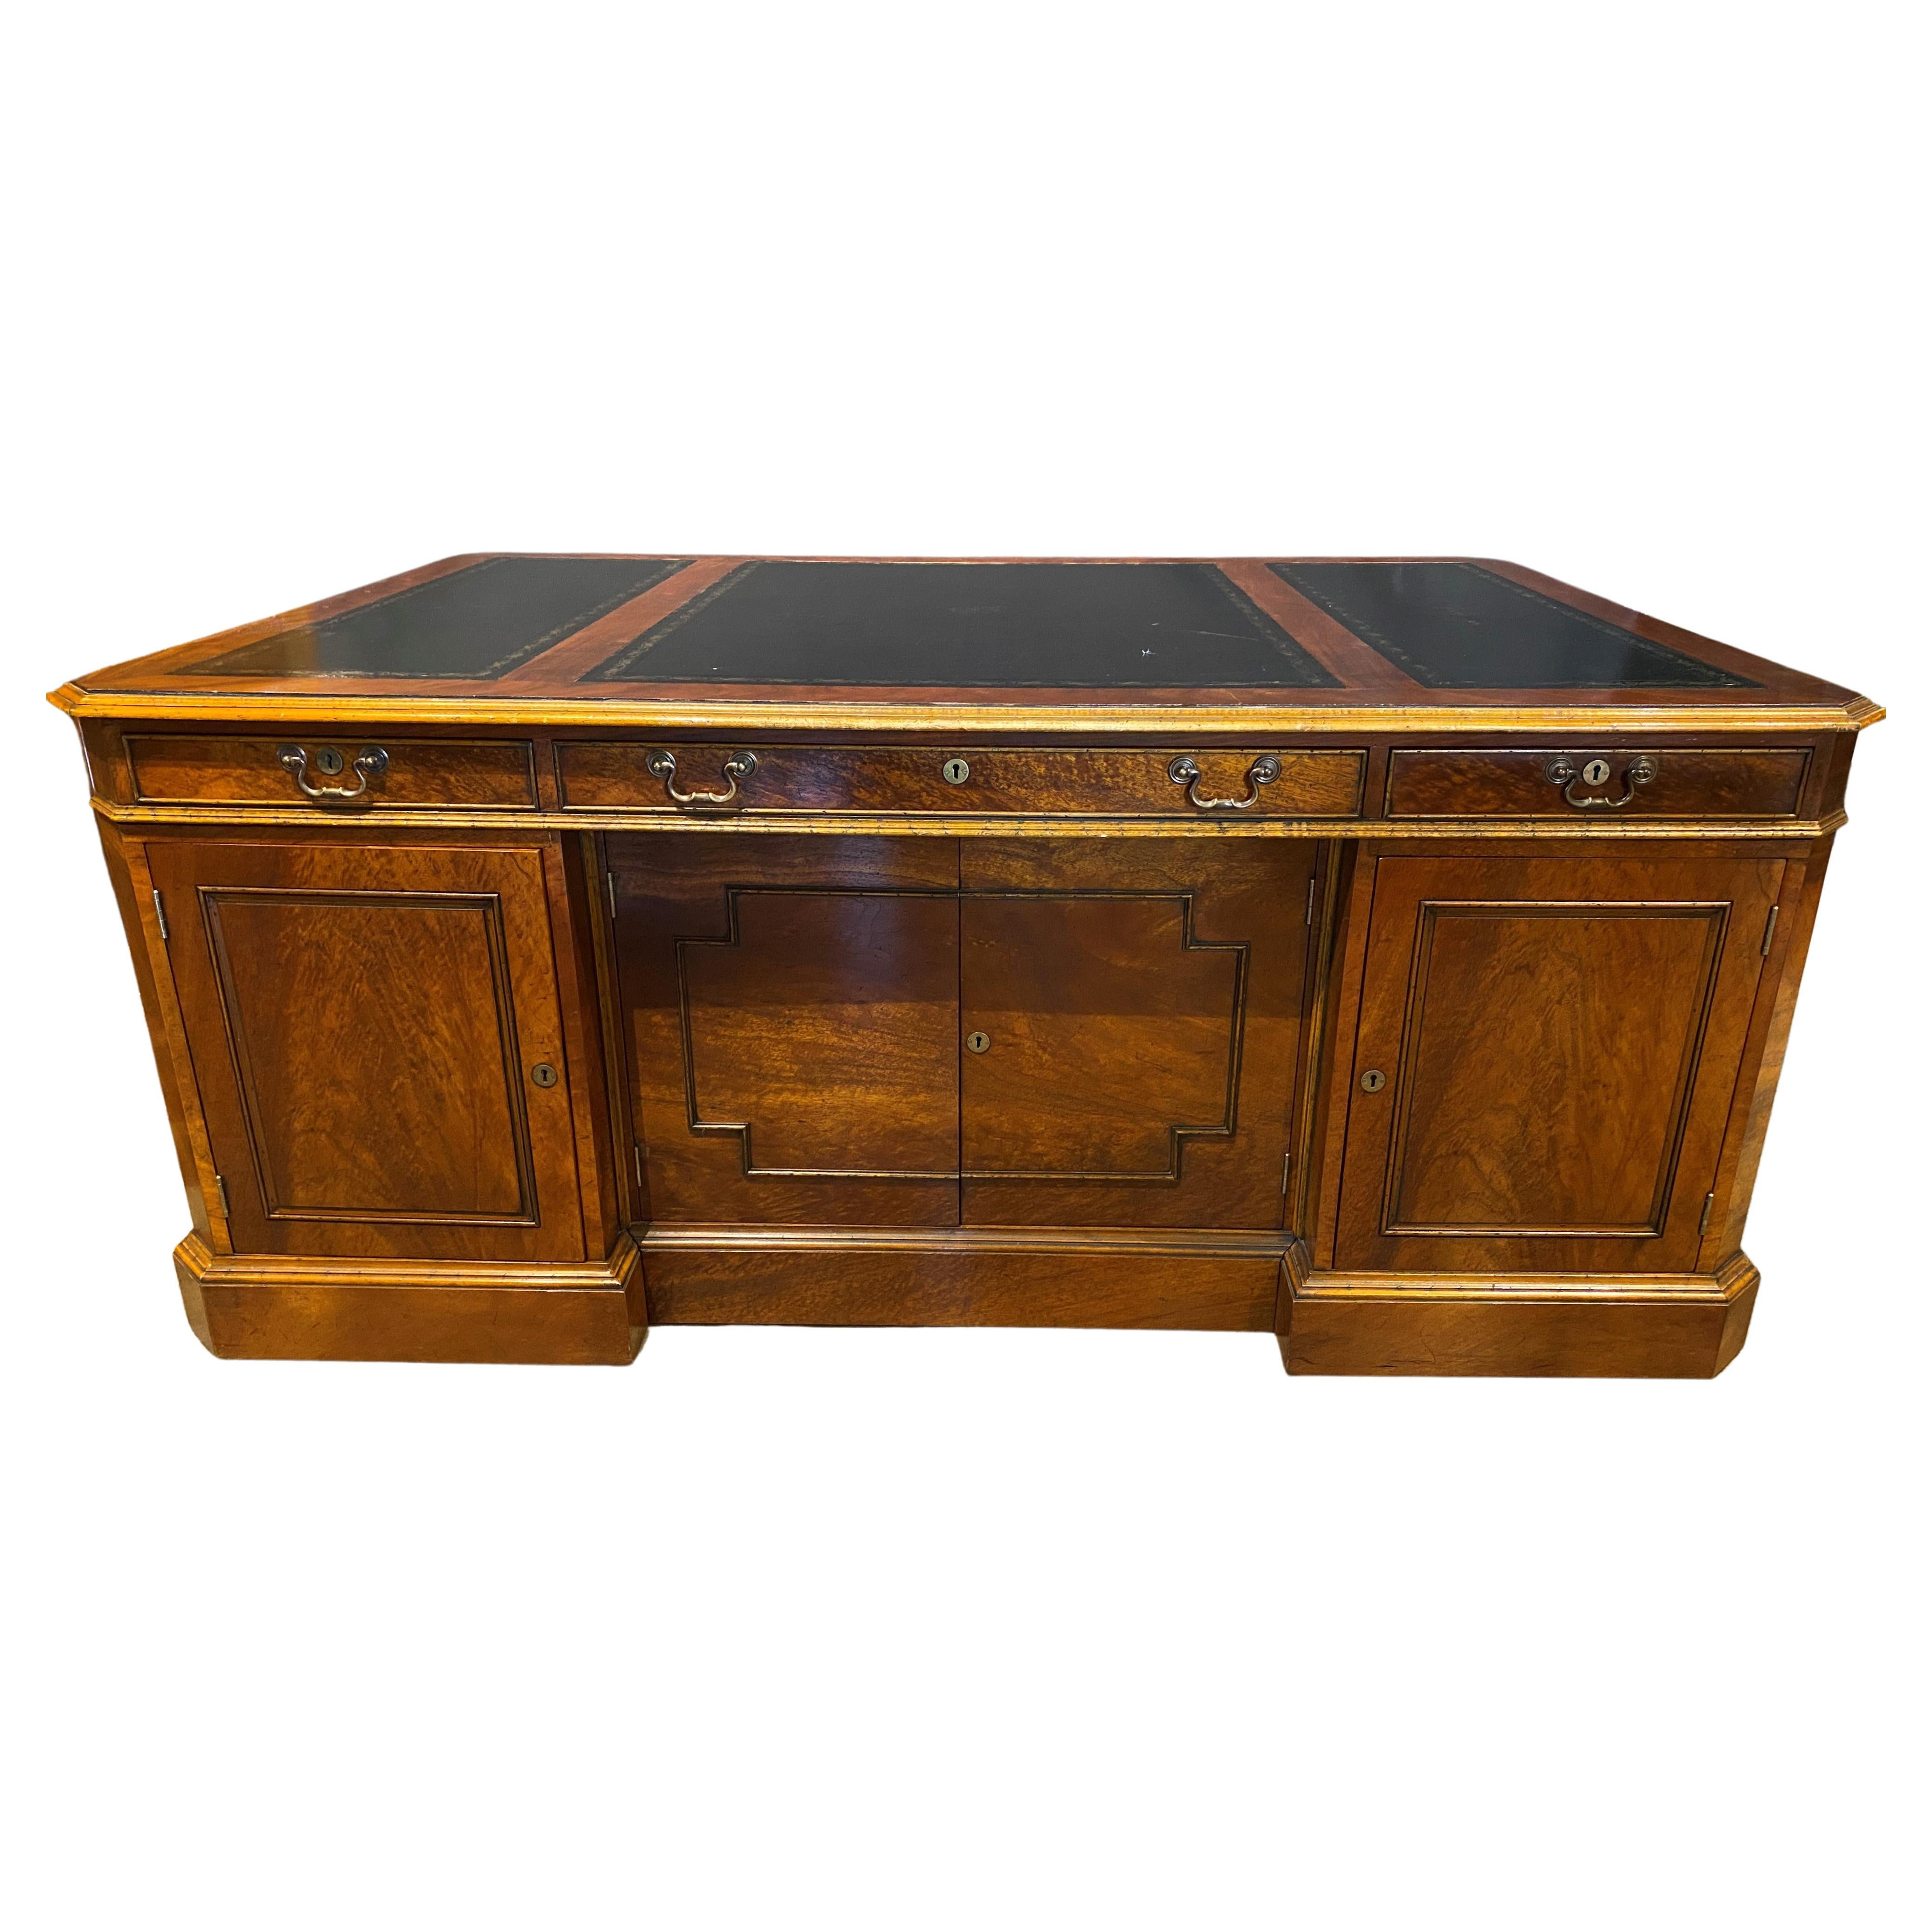 Nicely Paneled Mahogany & Burled Walnut Veneered Leather Top Partners Desk